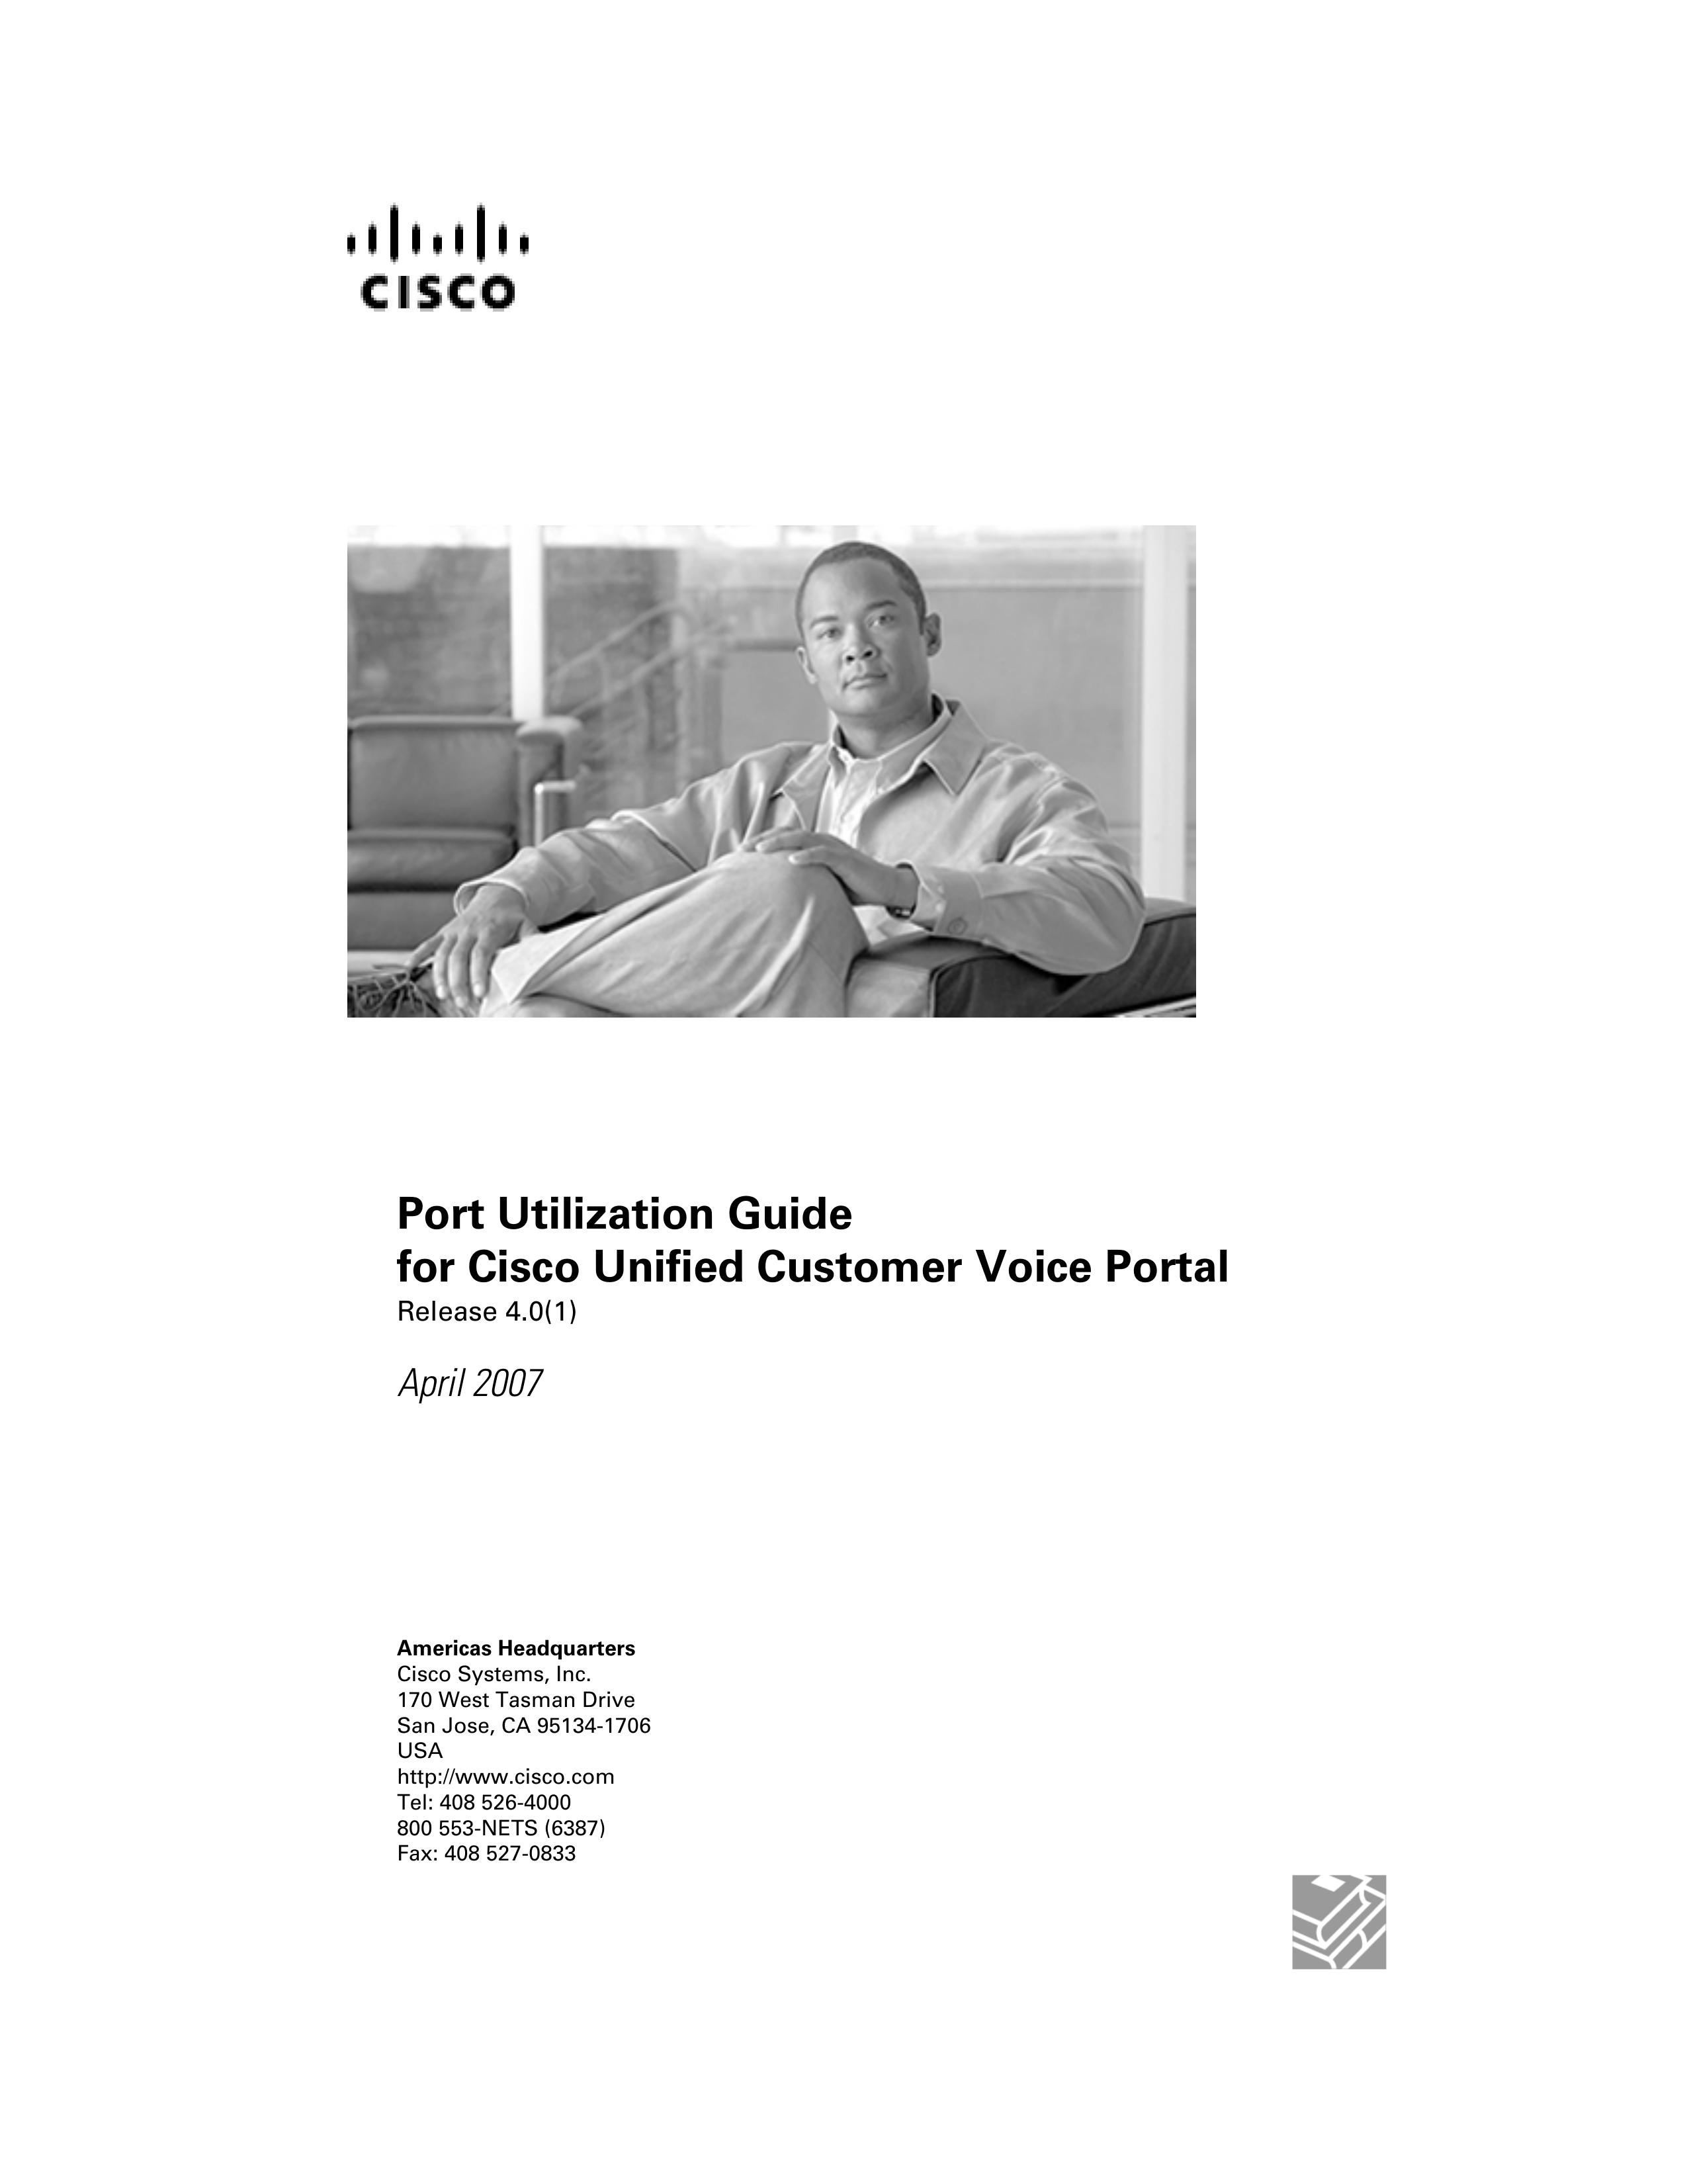 Cisco Systems 4.0(1) Recording Equipment User Manual